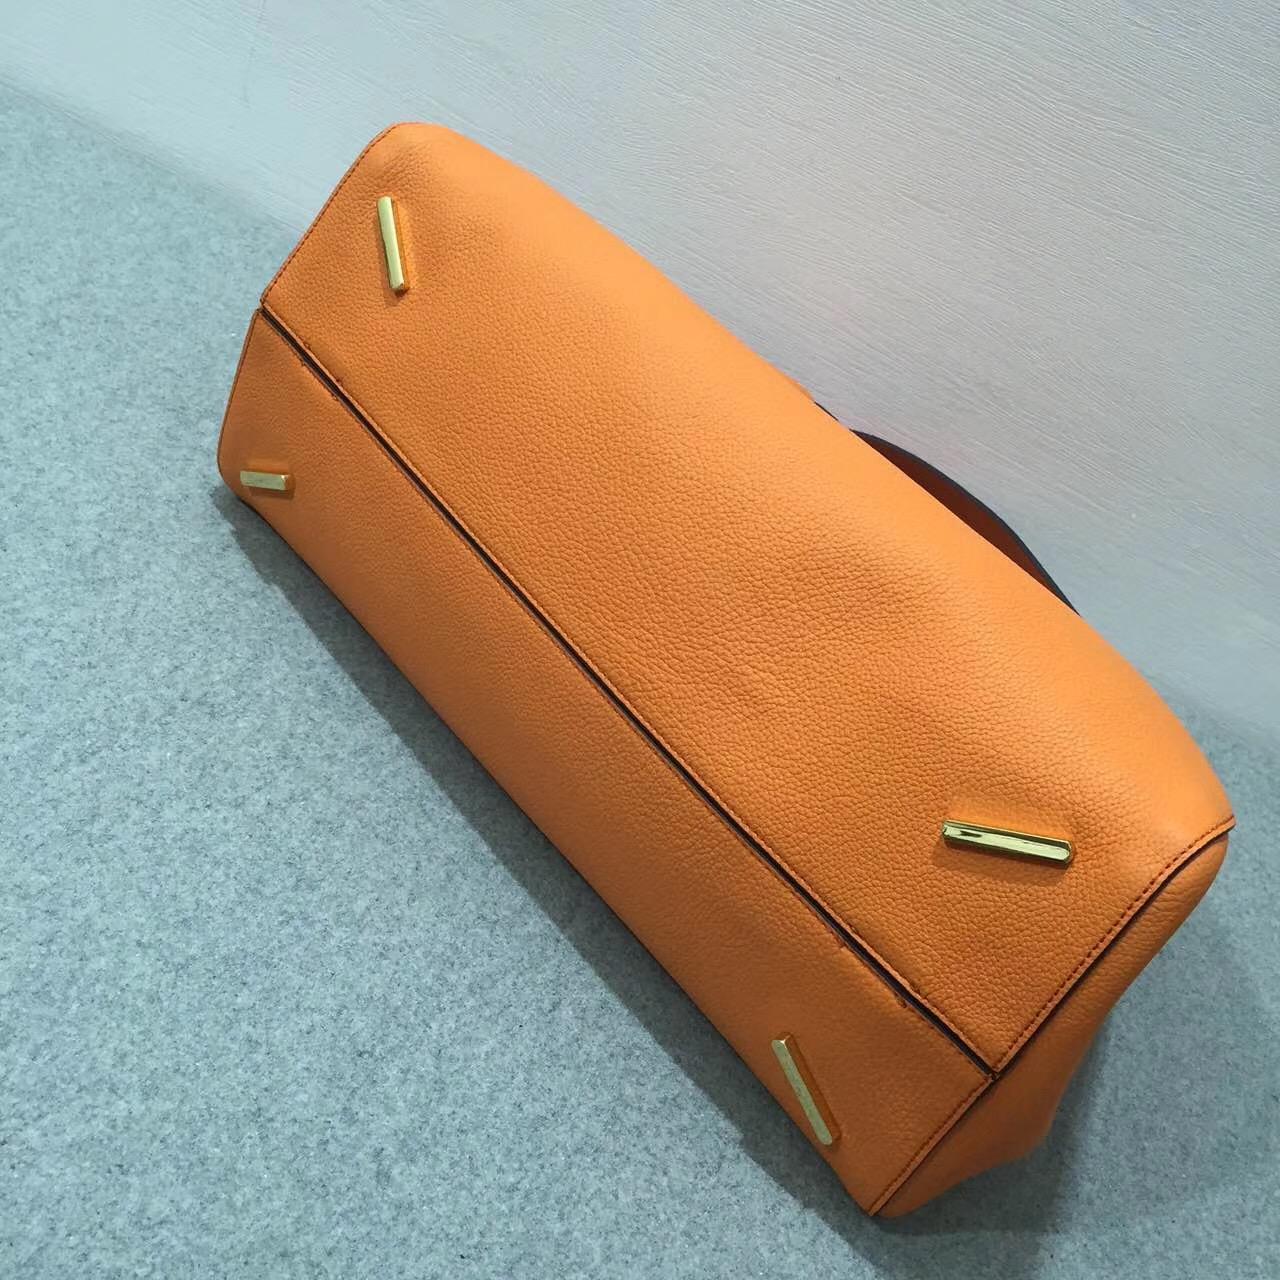 loewe羅意威巴塞羅那包 Barcelona Tote Bag 橙色日常旅行袋